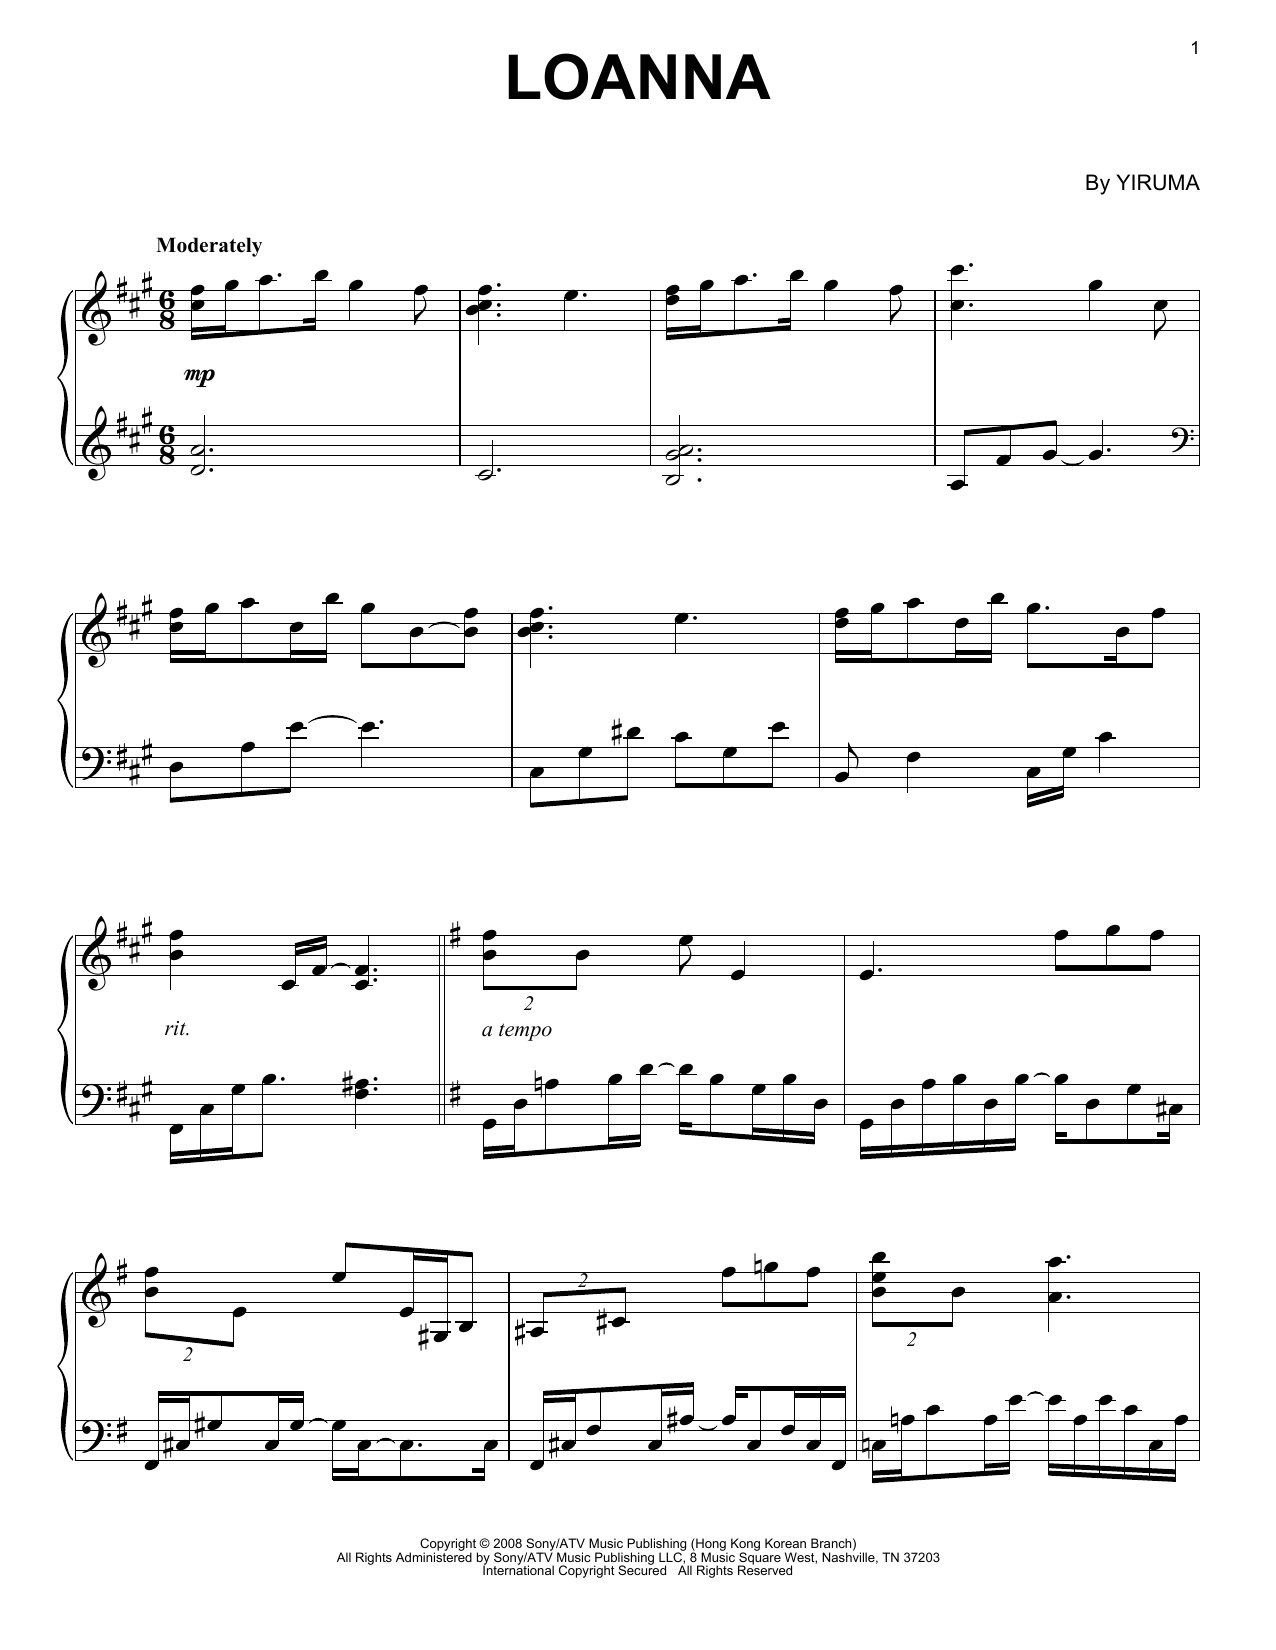 Yiruma Loanna Sheet Music Notes & Chords for Easy Piano - Download or Print PDF